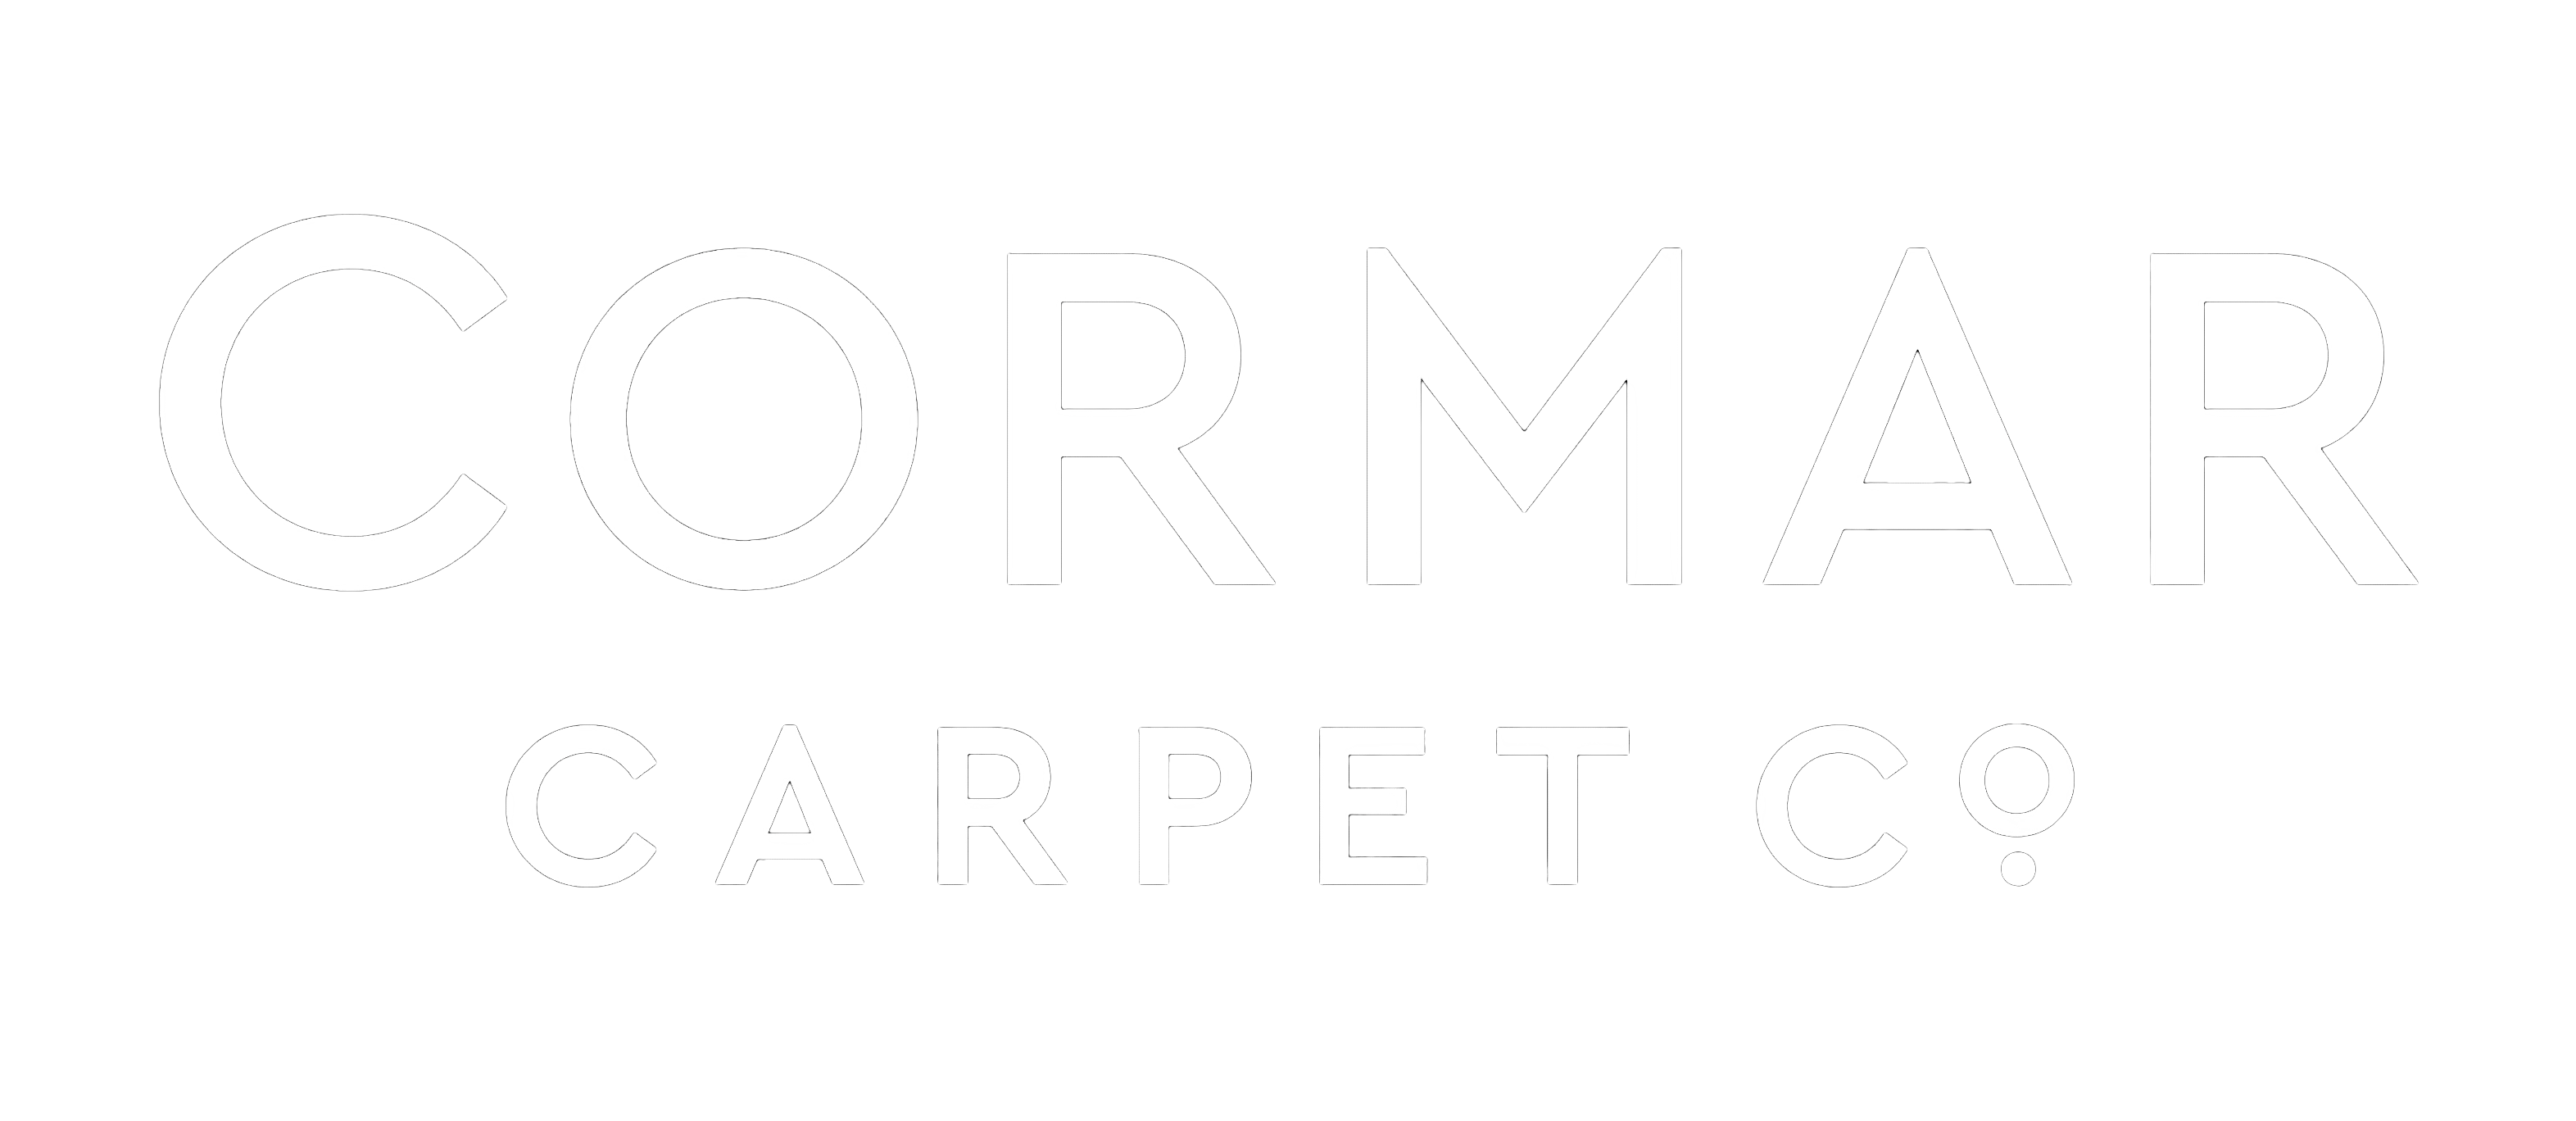 Cormar Carpet Co.